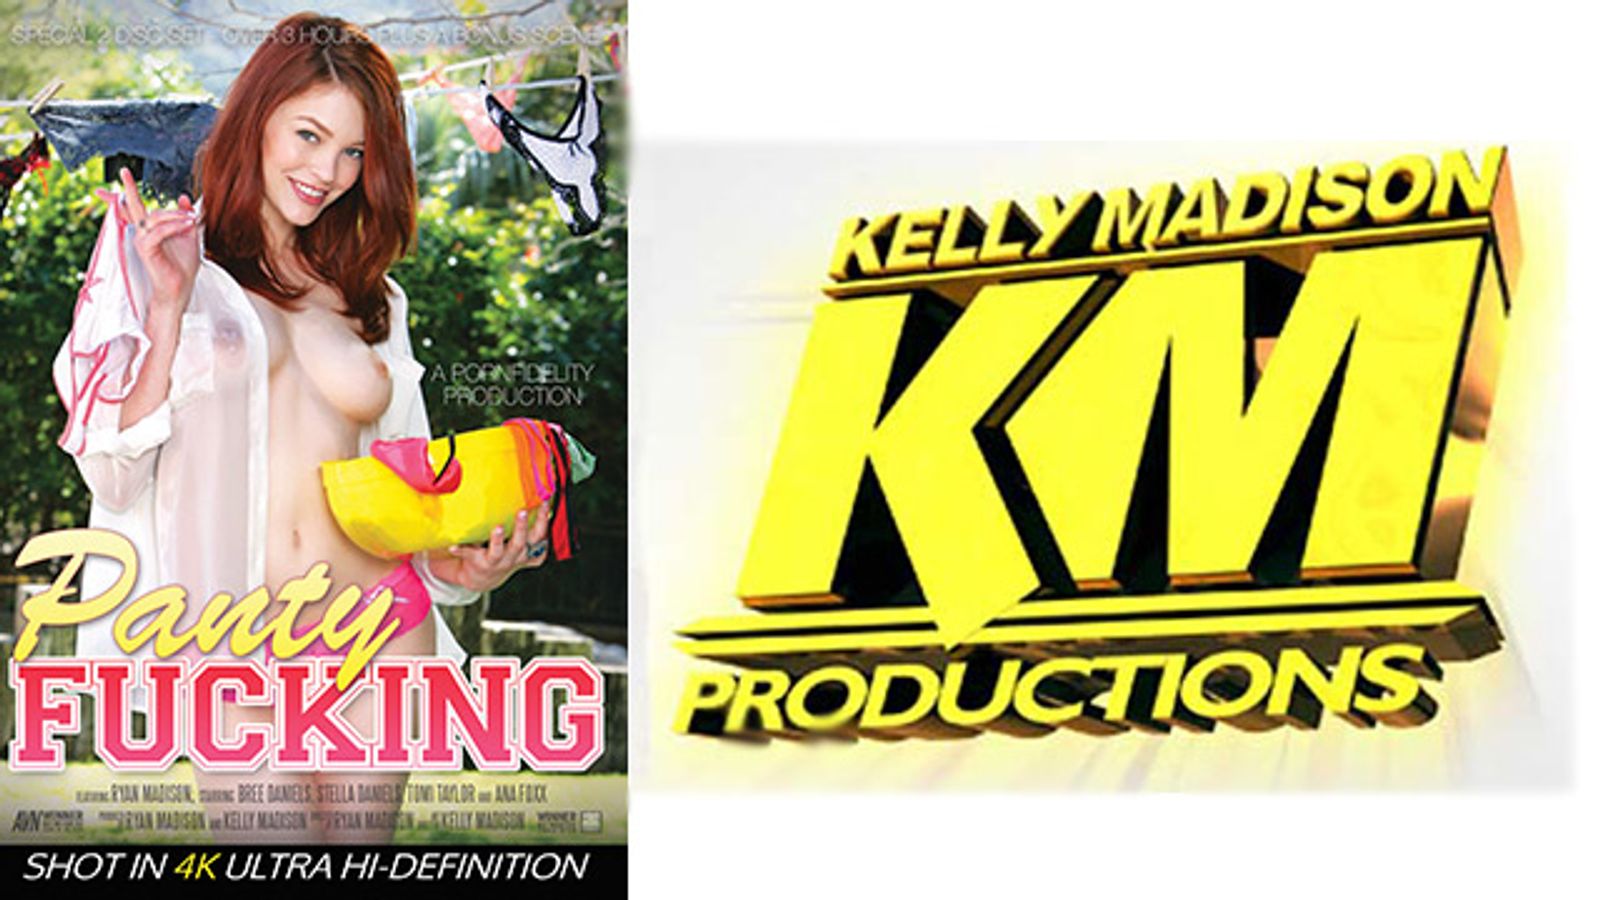 Kelly Madison Media’s ‘Panty Fucking’ Begins Shipping on DVD